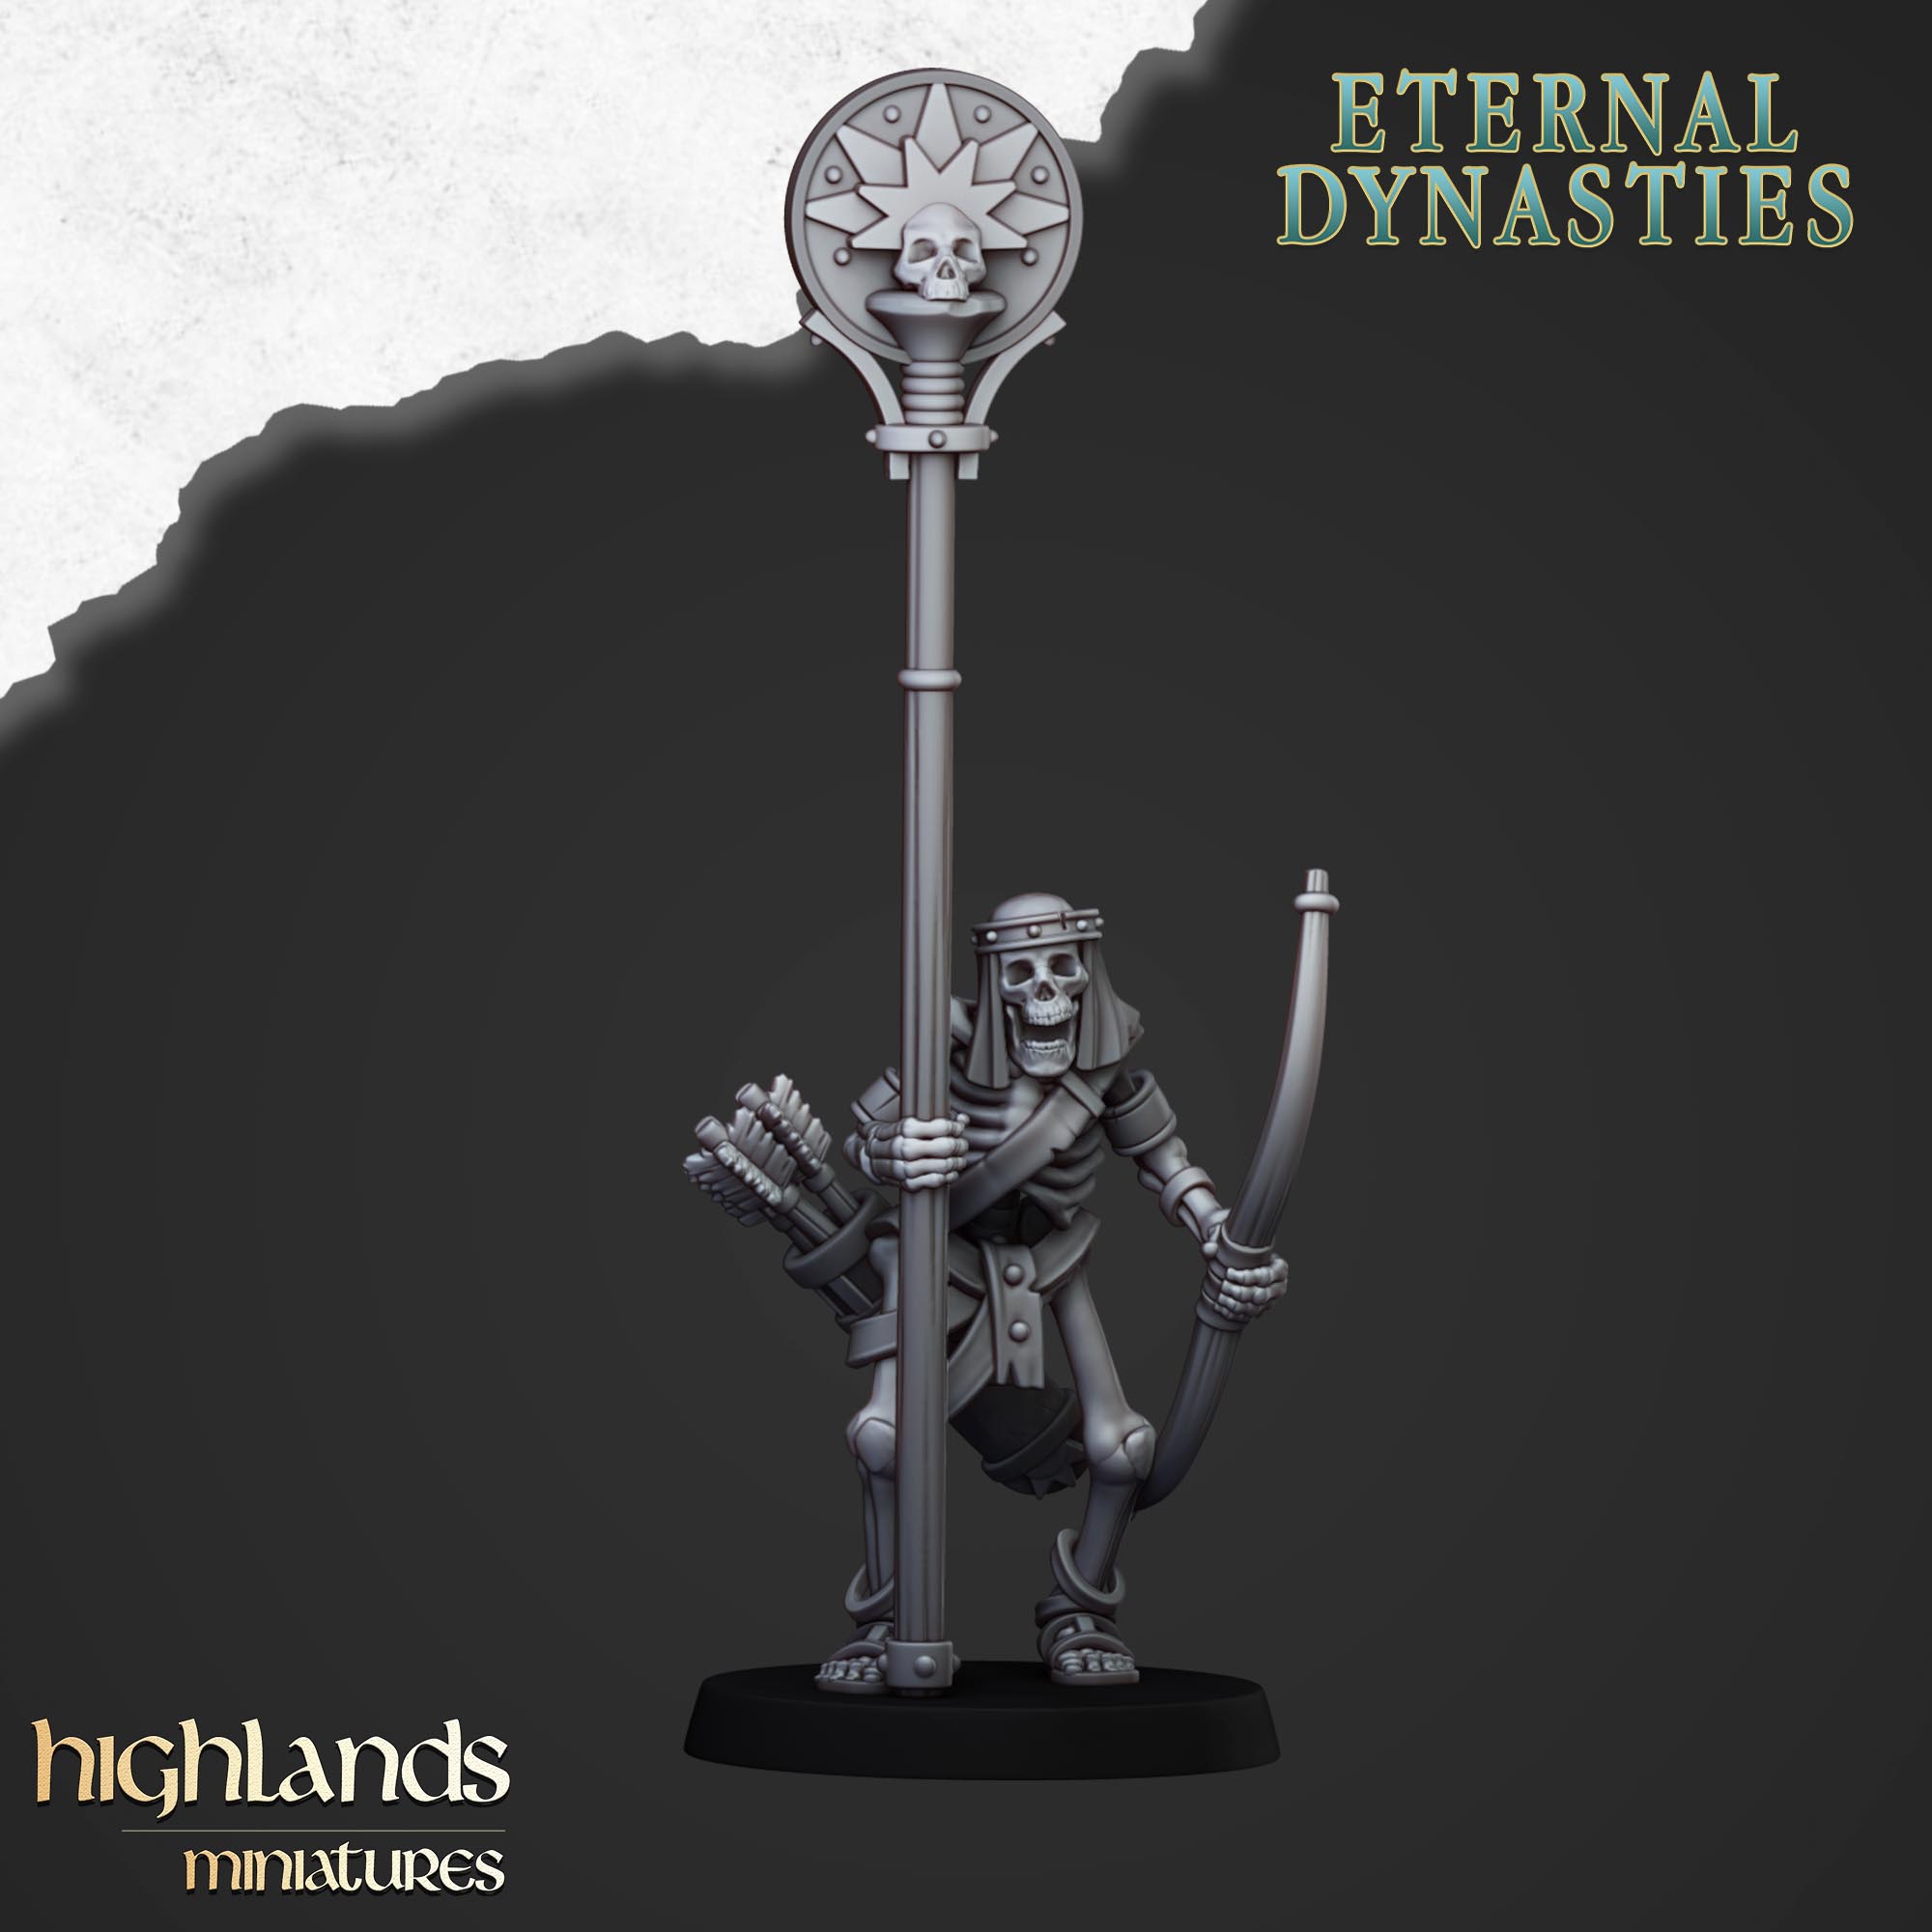 Ancient Skeleton Archers (x10) - Eternal Dynasties | Highlands Miniatures